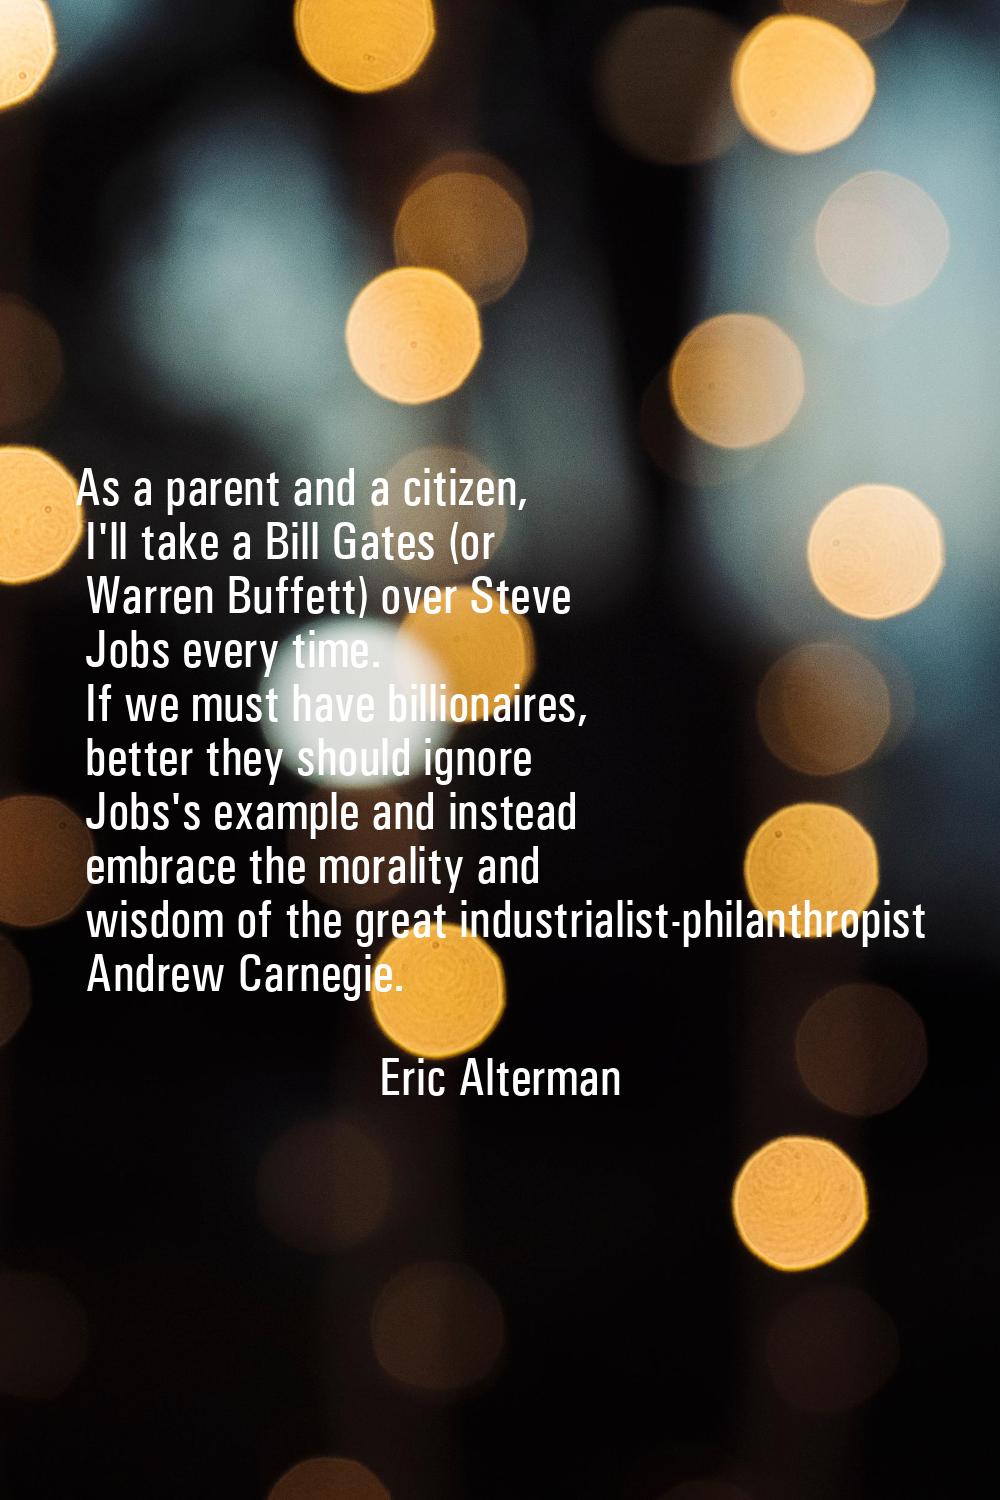 As a parent and a citizen, I'll take a Bill Gates (or Warren Buffett) over Steve Jobs every time. I